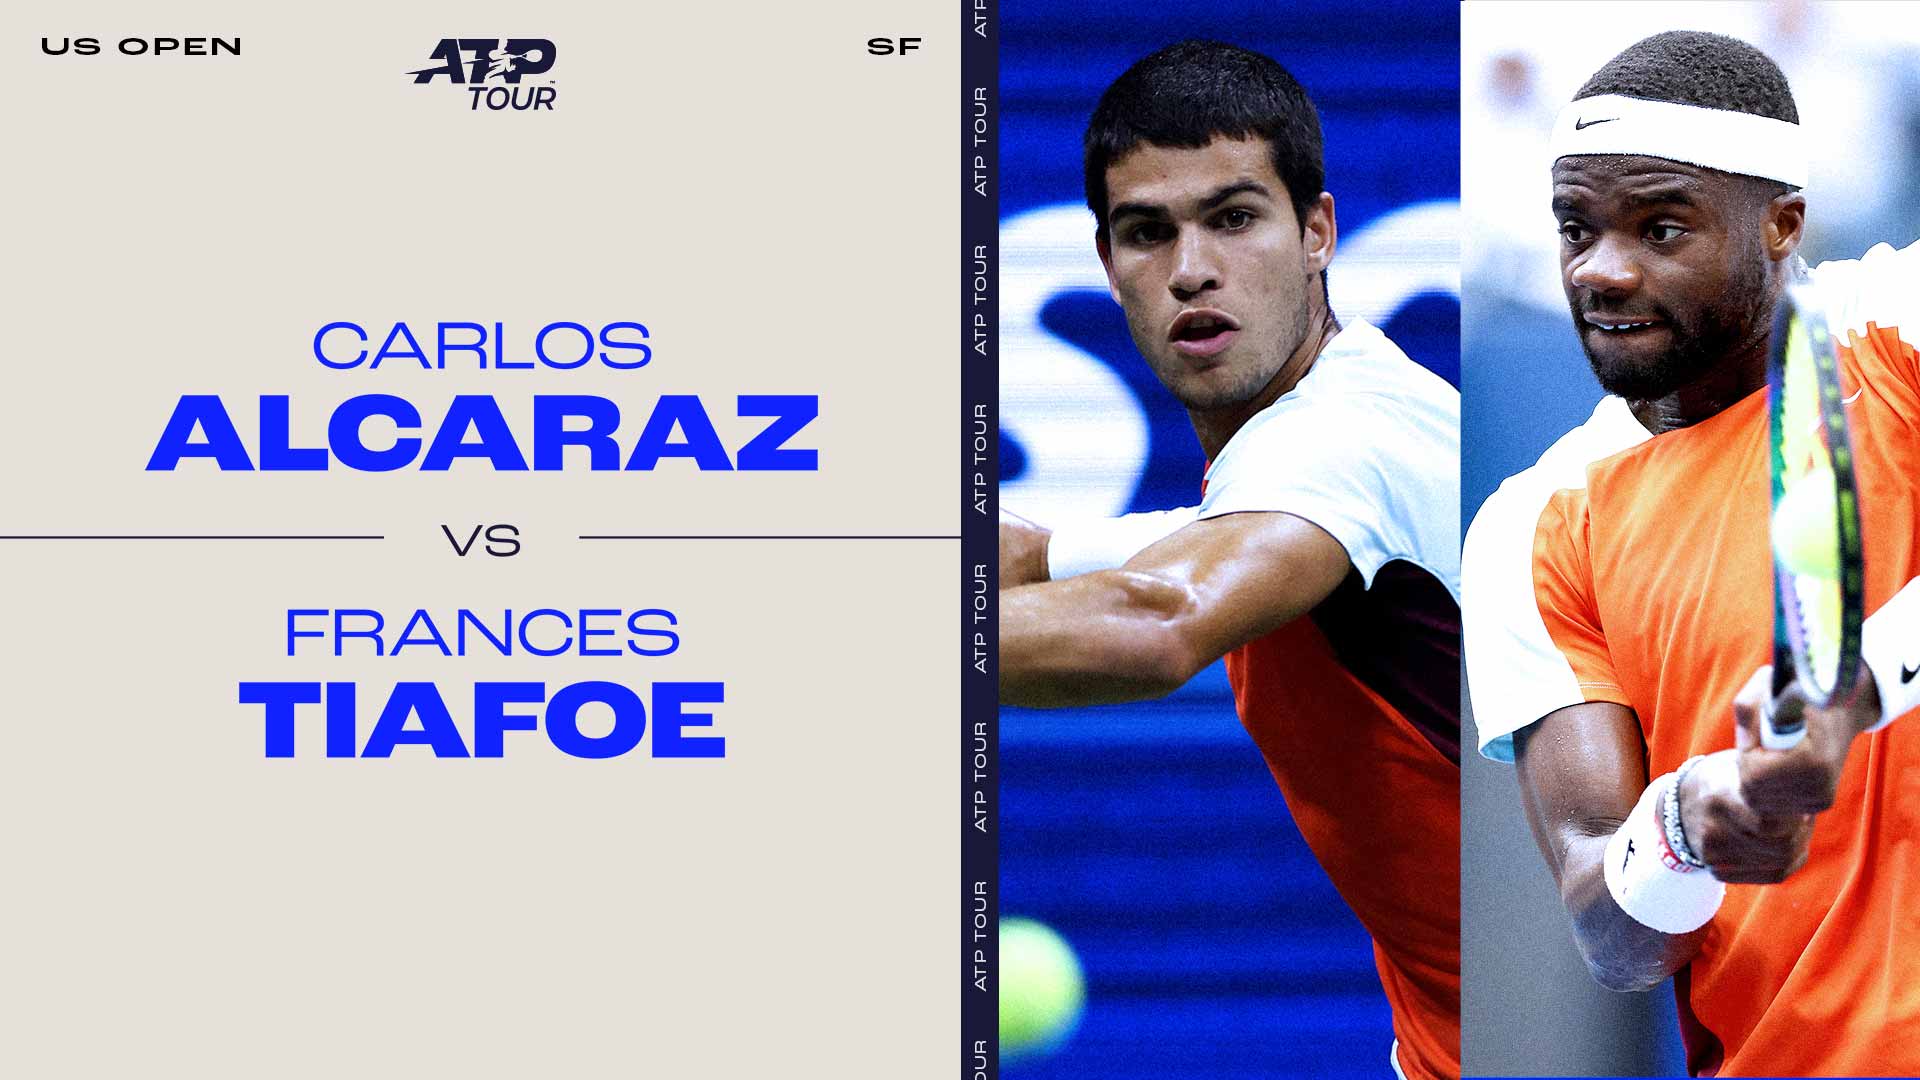 Carlos Alcaraz and Frances Tiafoe both seek their first appearance in a Grand Slam final.